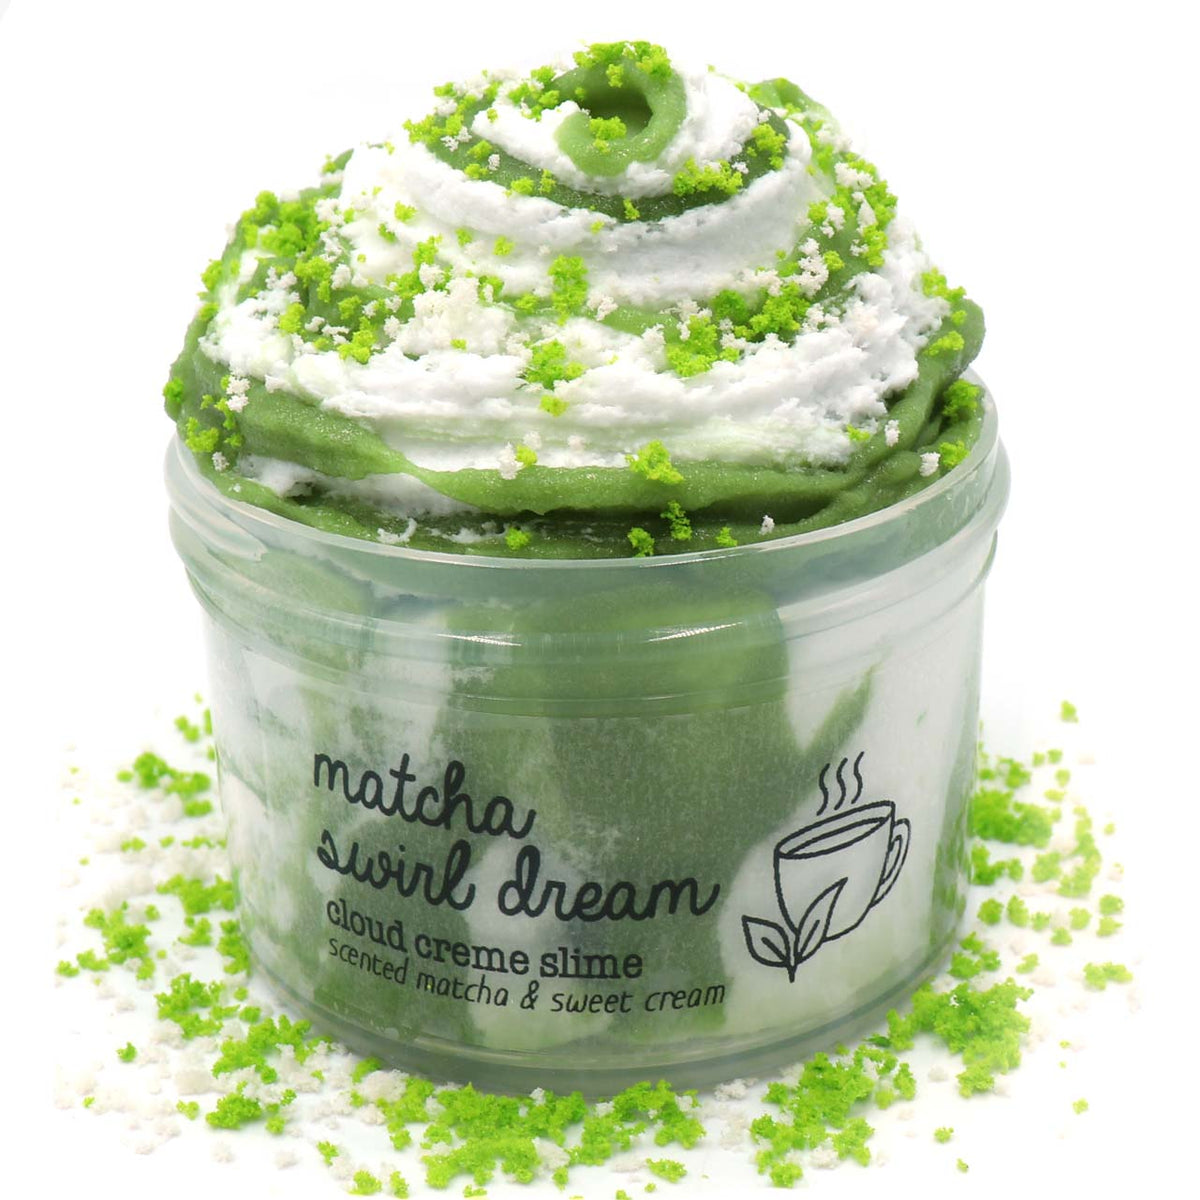 Matcha Swirl Dream Green White Tea Marbled Swirled Sprinkles Cloud Creme Cream Slime Fantasies 7oz Front View